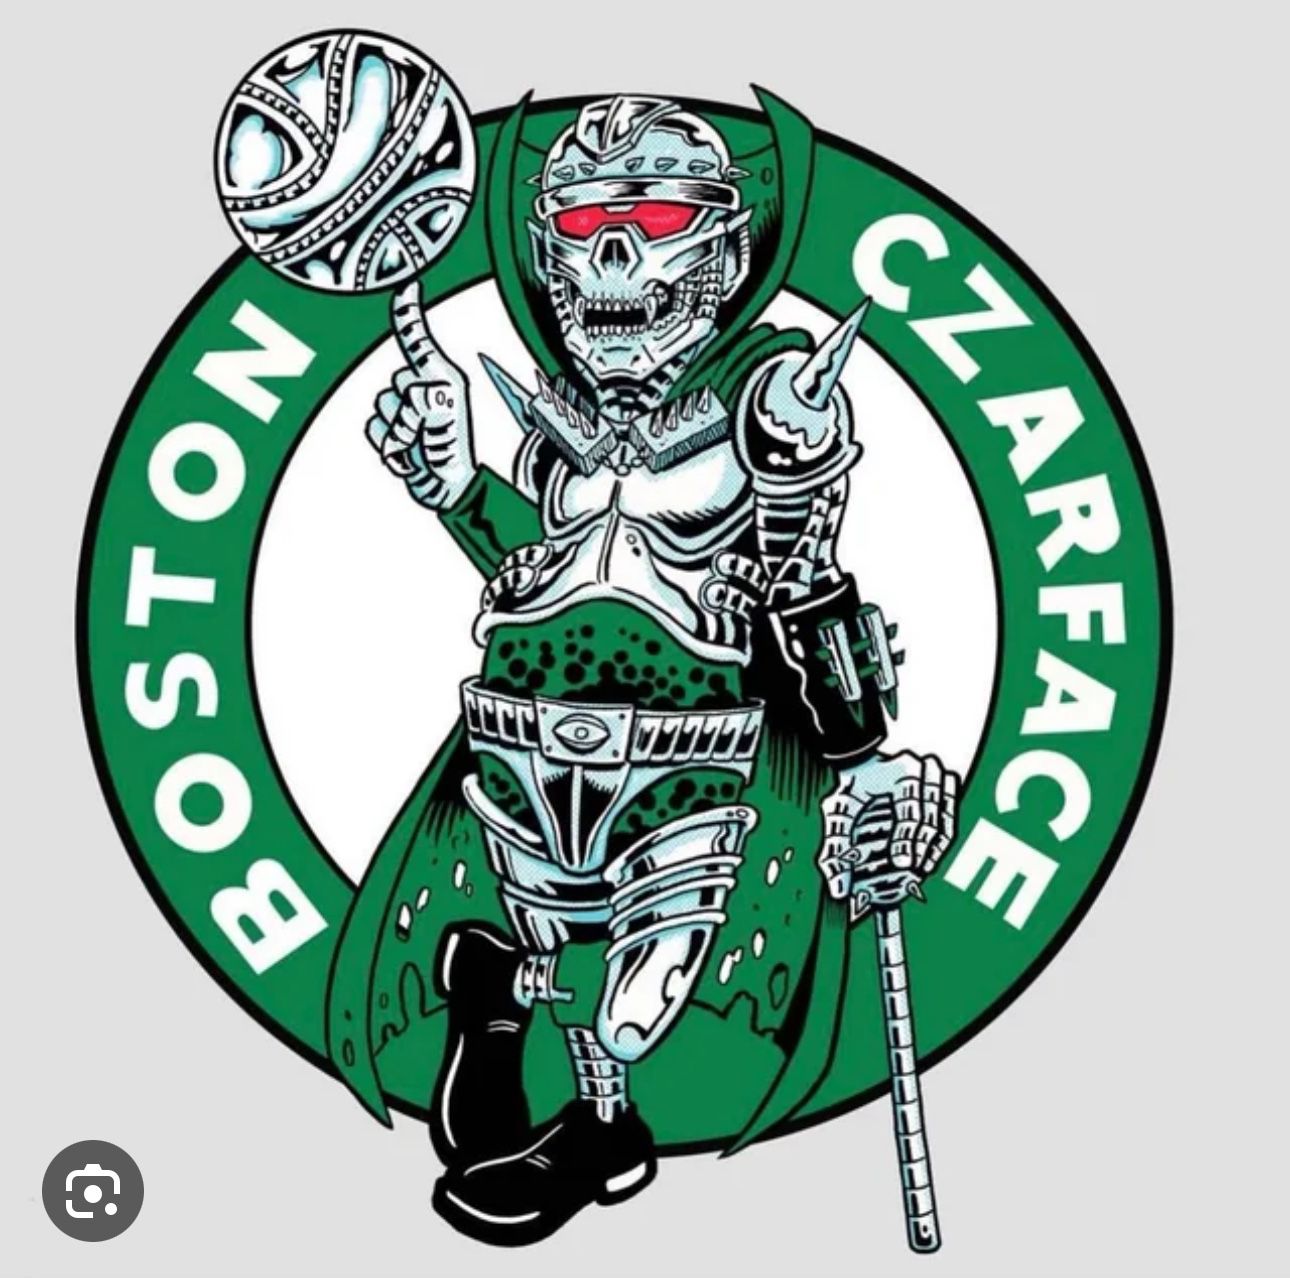 Celtics vs. Wizards - April 14